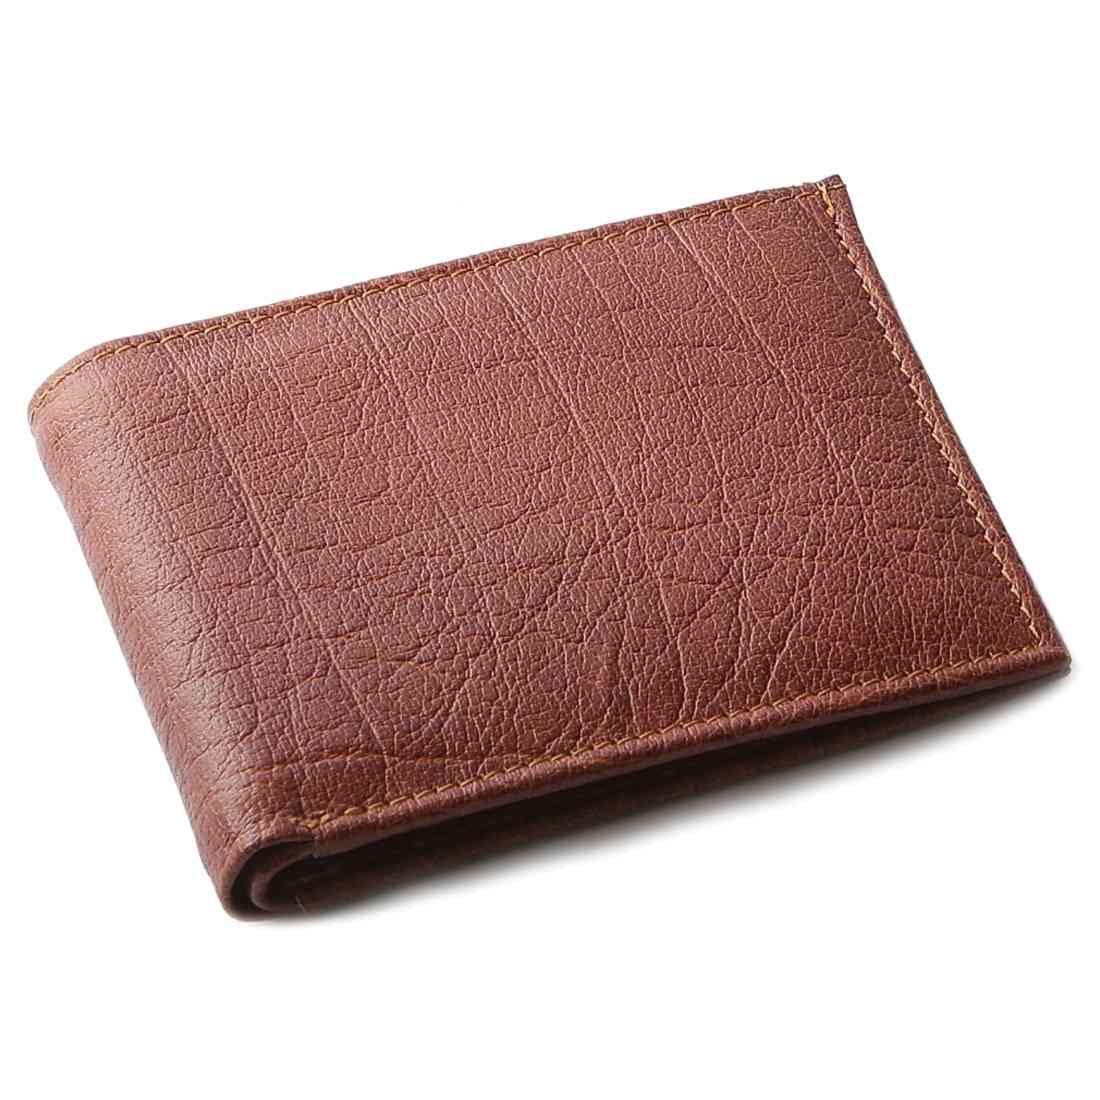 OHM New York Leather Bill Fold Wallet in Cognac